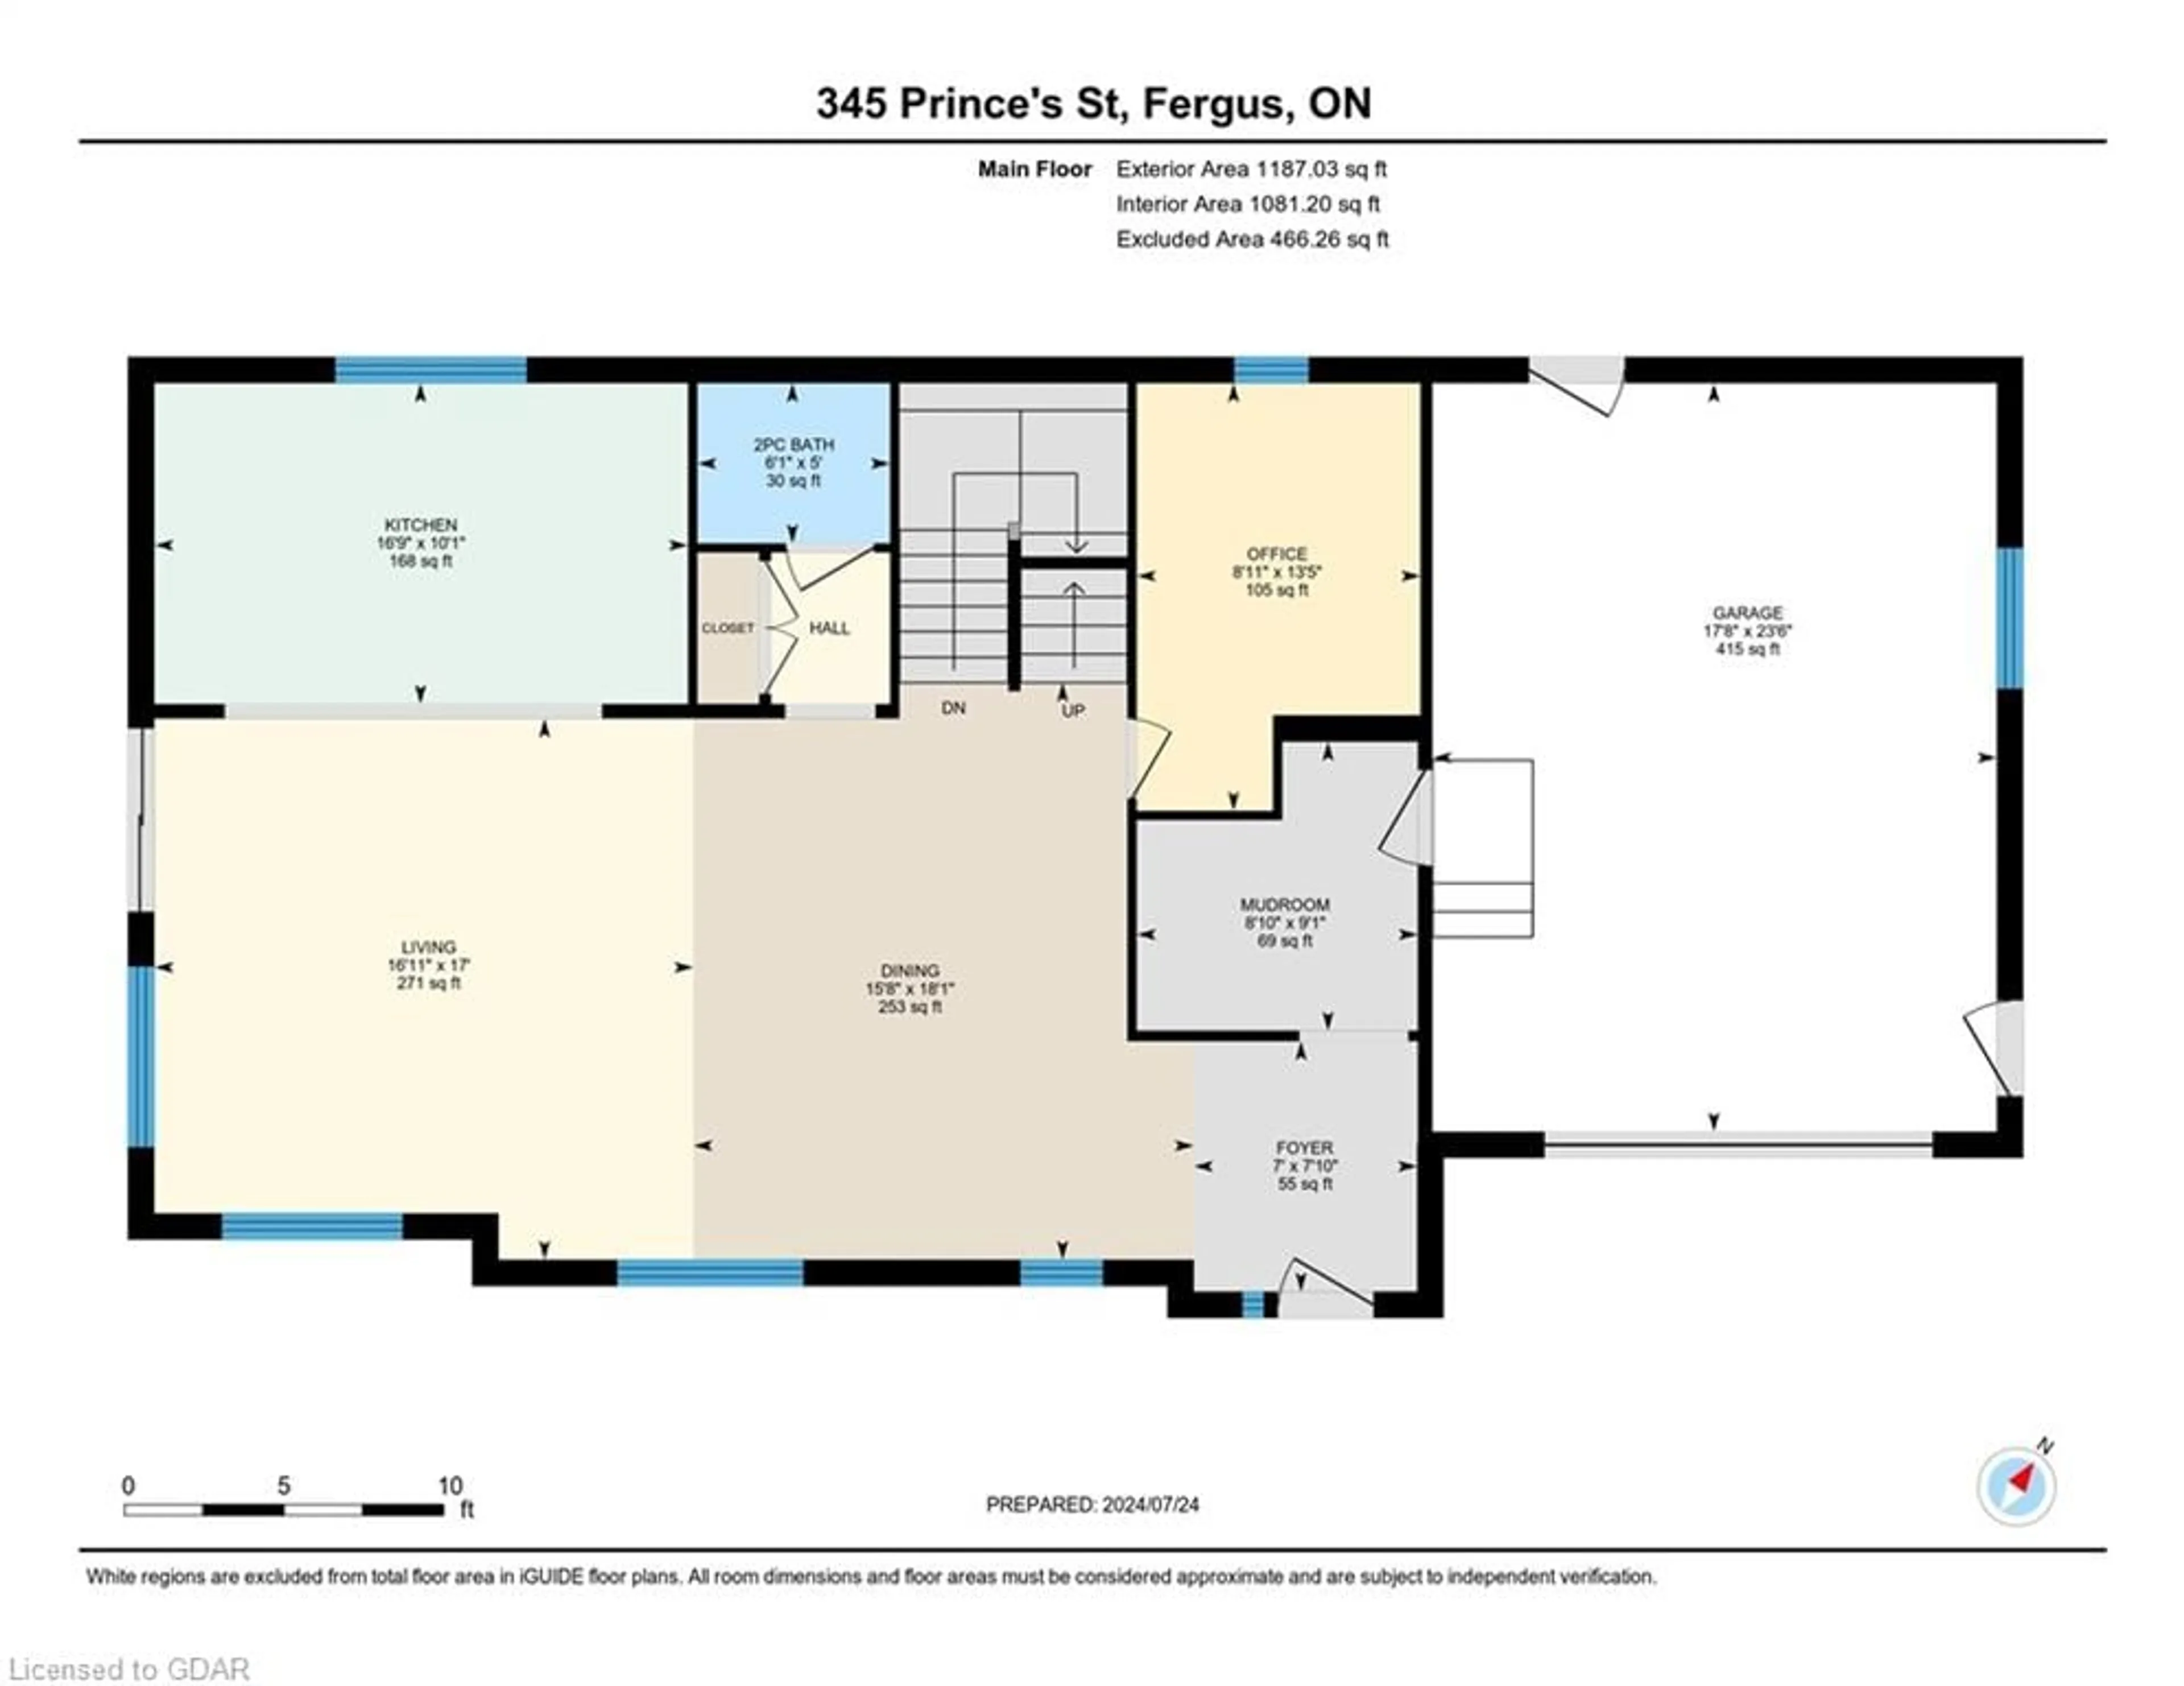 Floor plan for 345 Prince's St, Fergus Ontario N1M 2R7